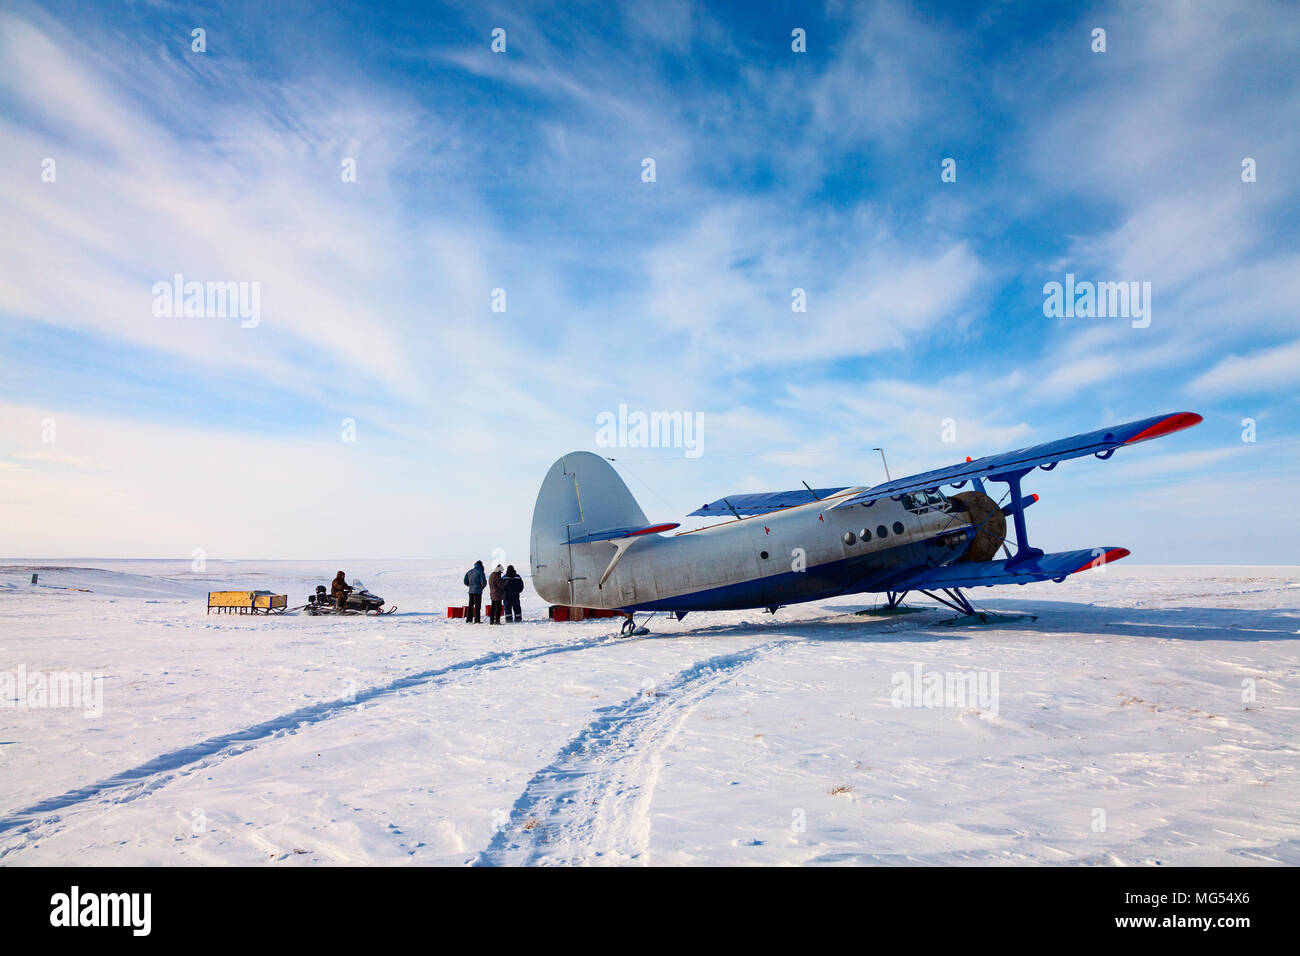 Airplane in winter tundra Stock Photo